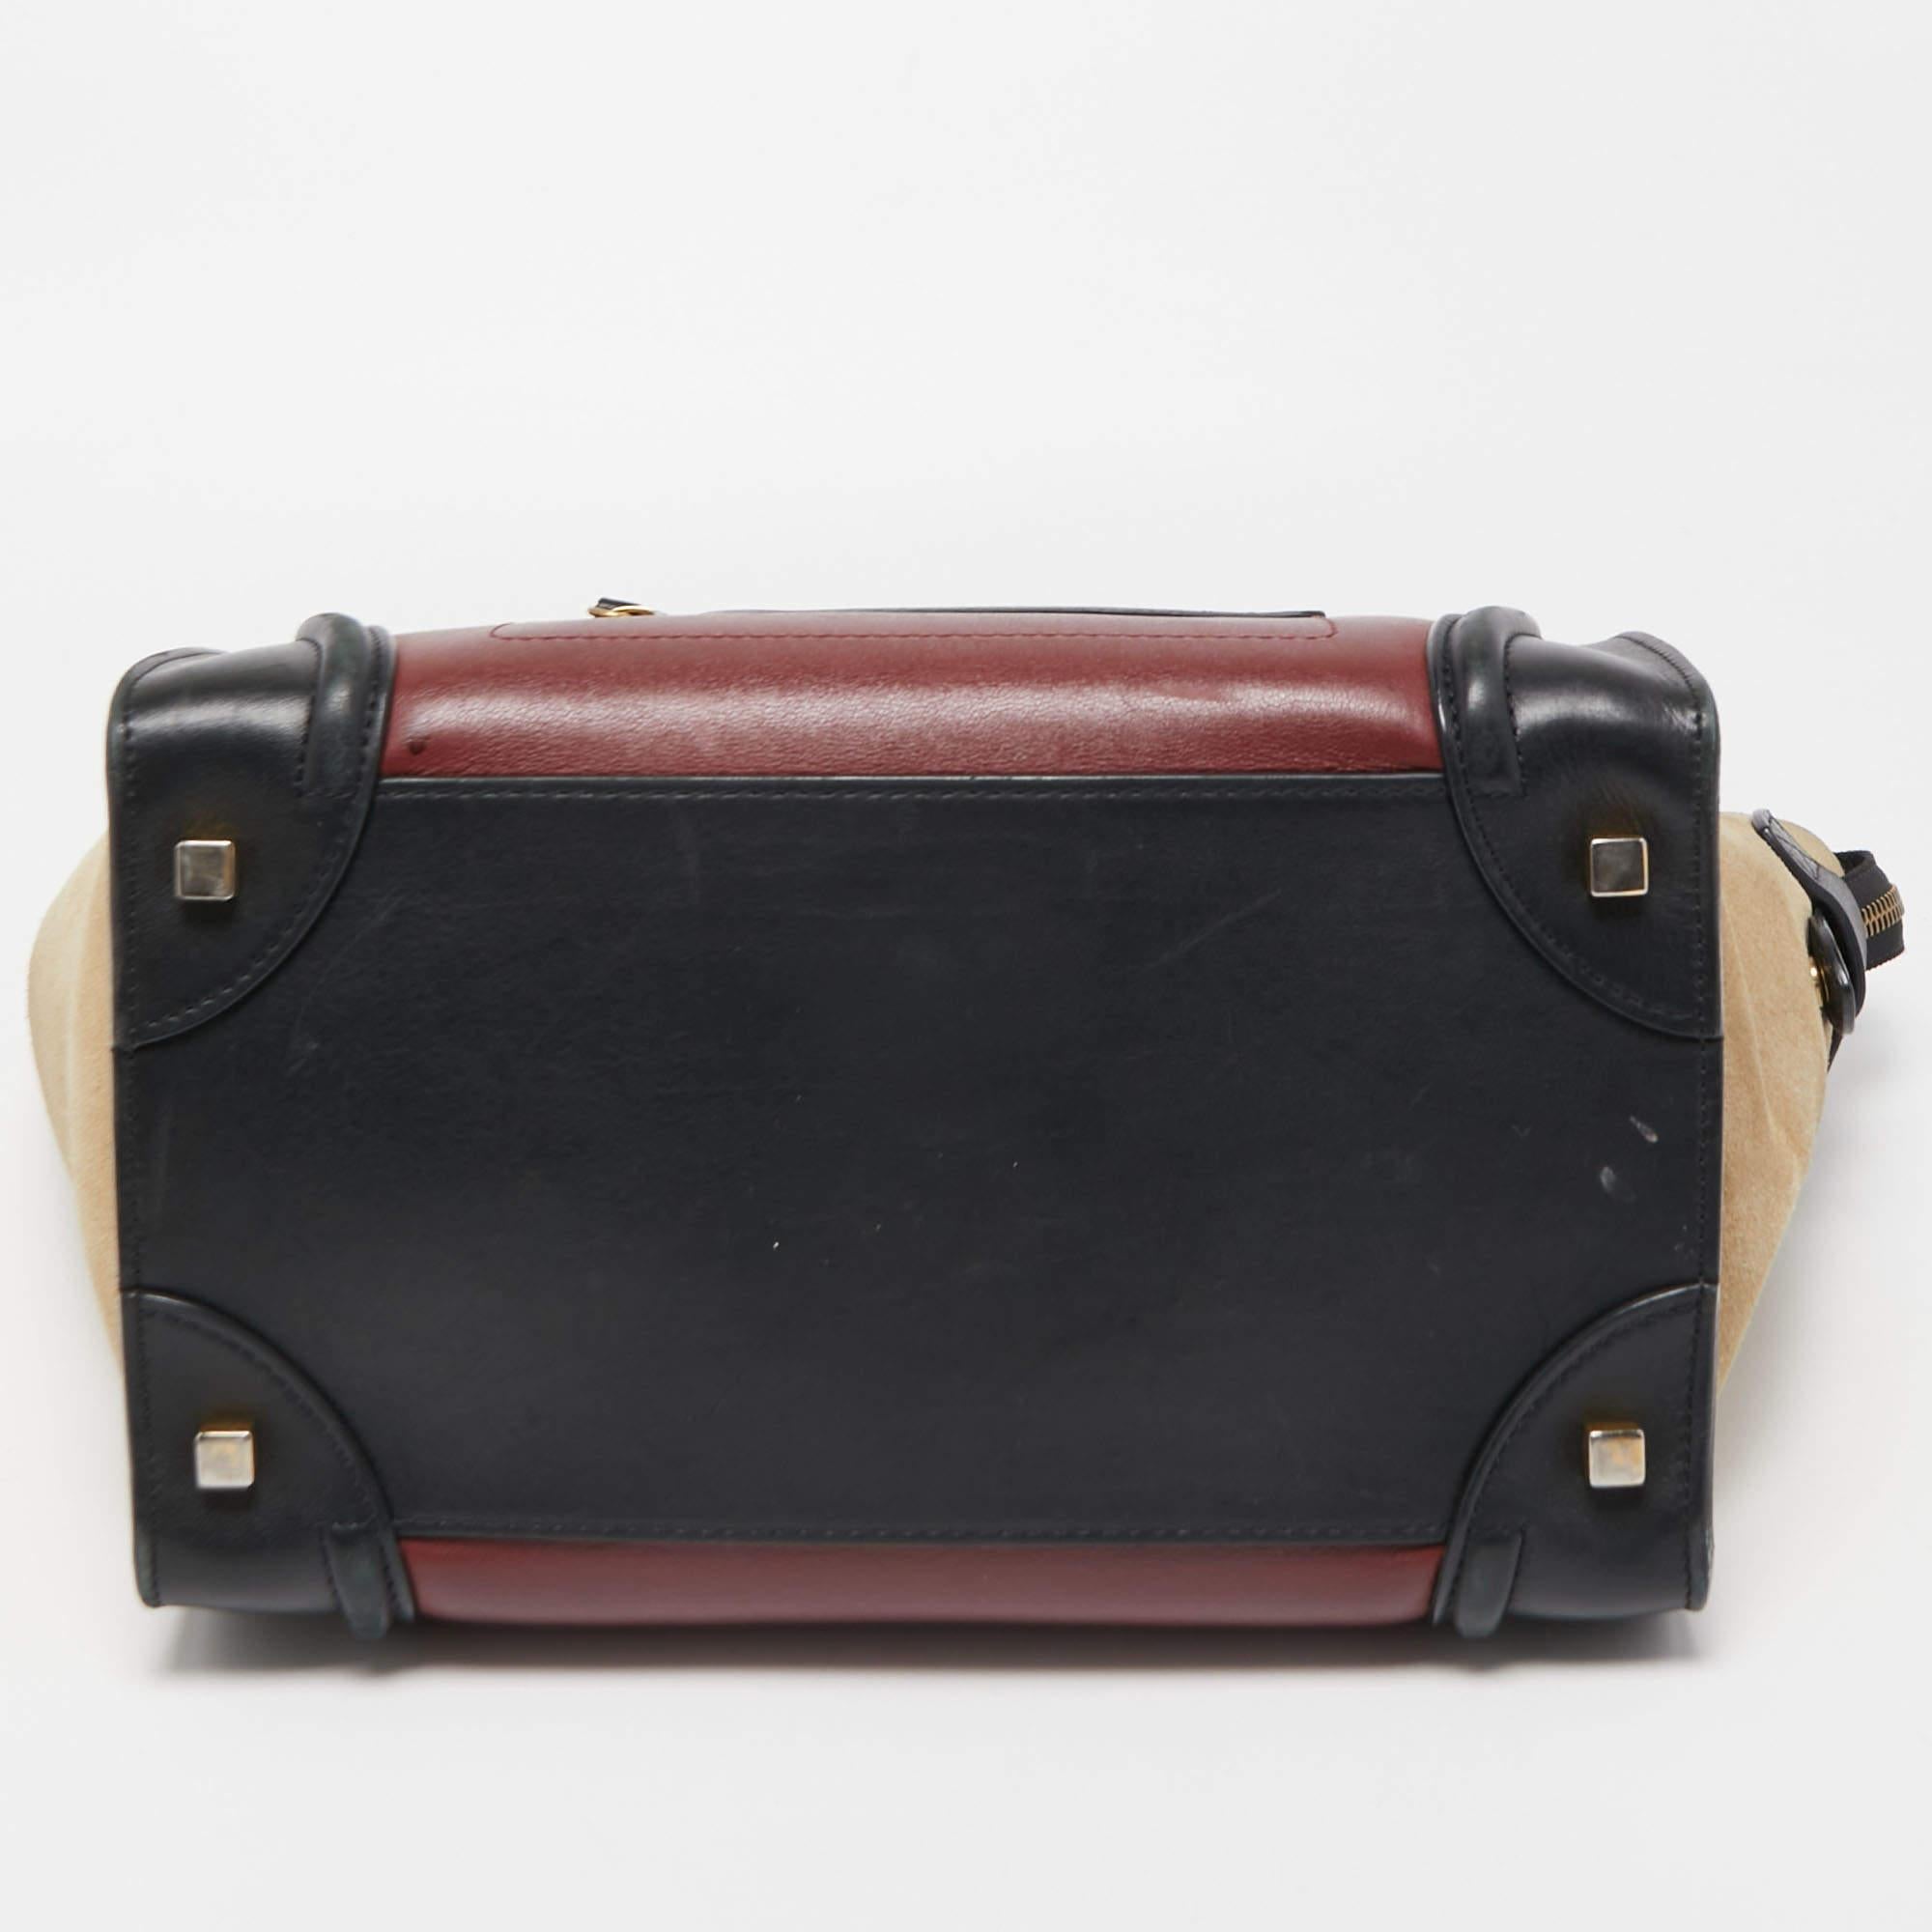 Celine Tri Color Leather and Suede Mini Luggage Tote 12